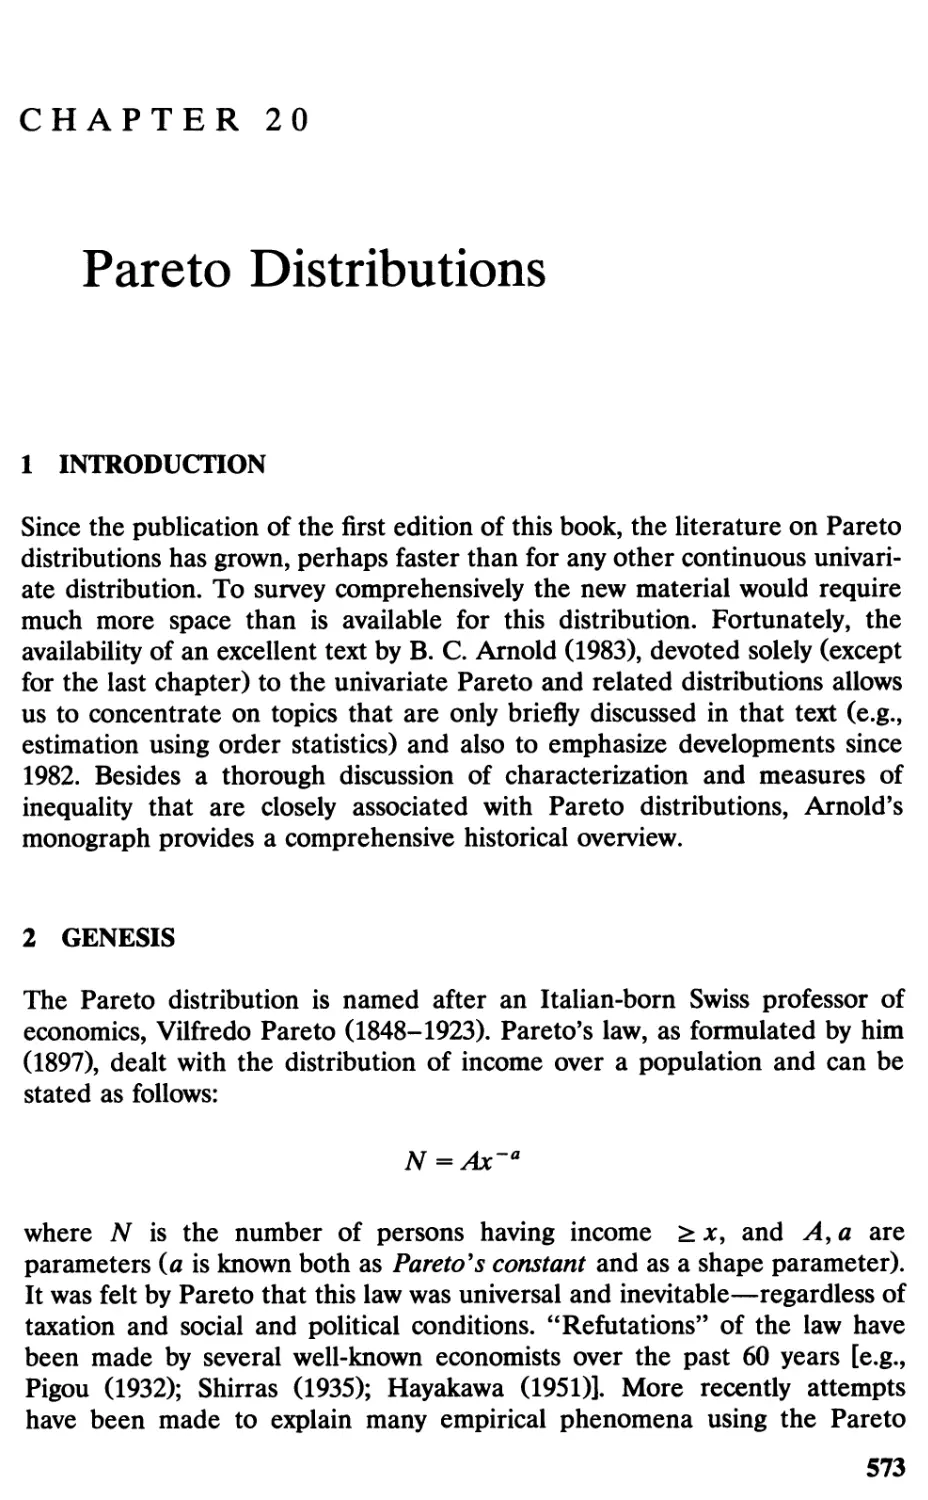 20 Pareto Distributions,573
2 Genesis, 573